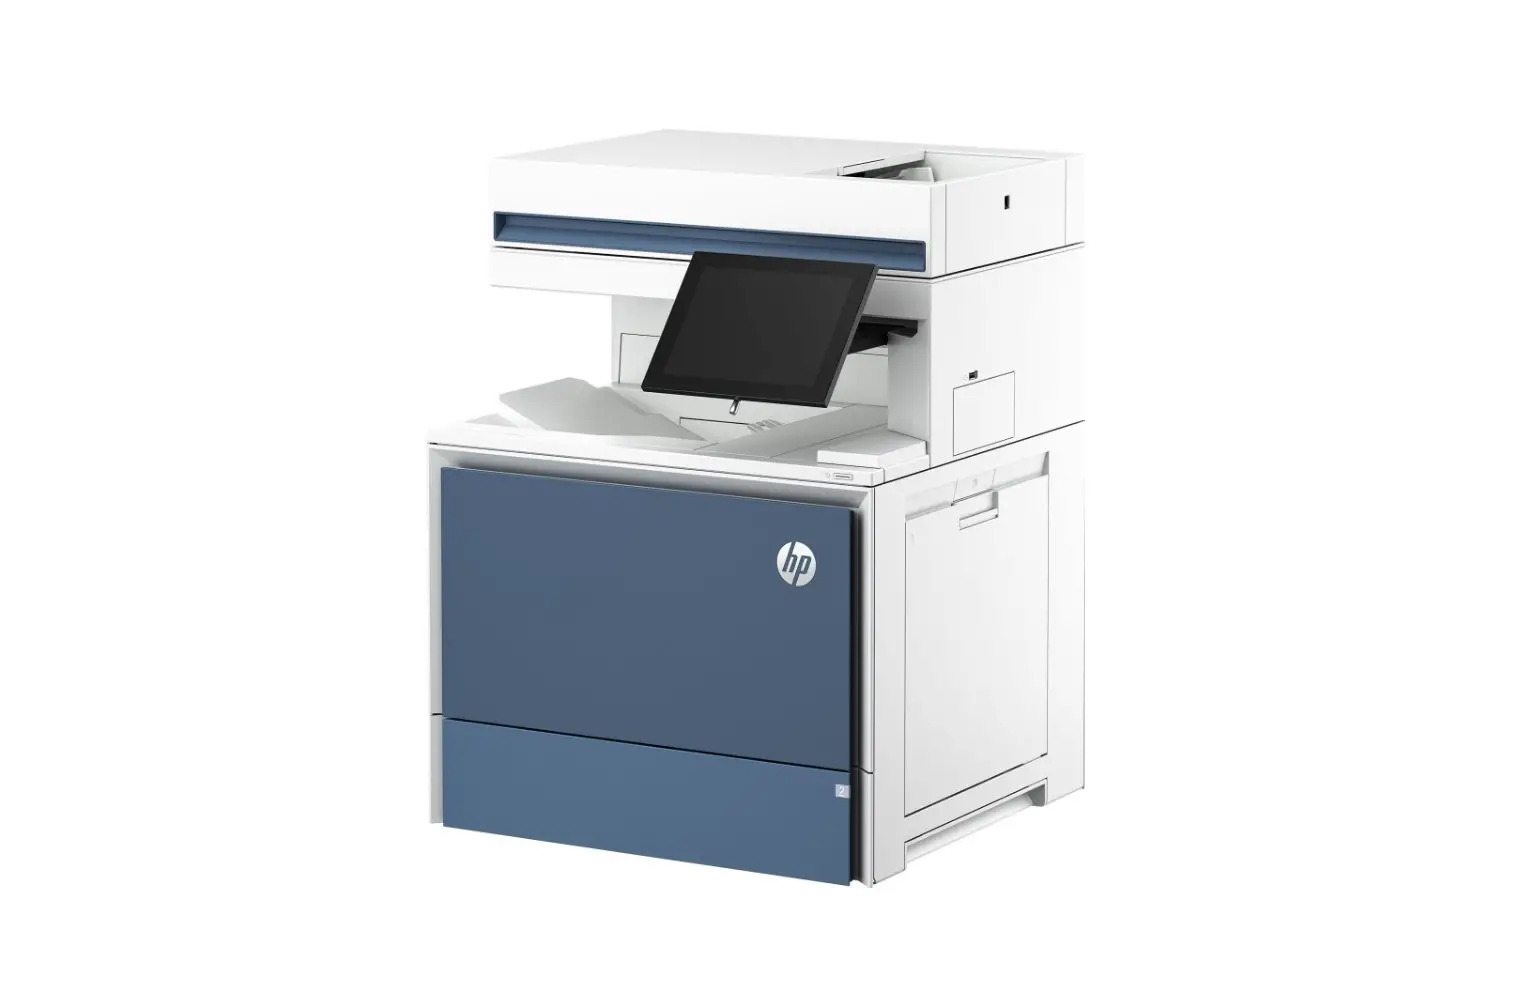 Printer 6800